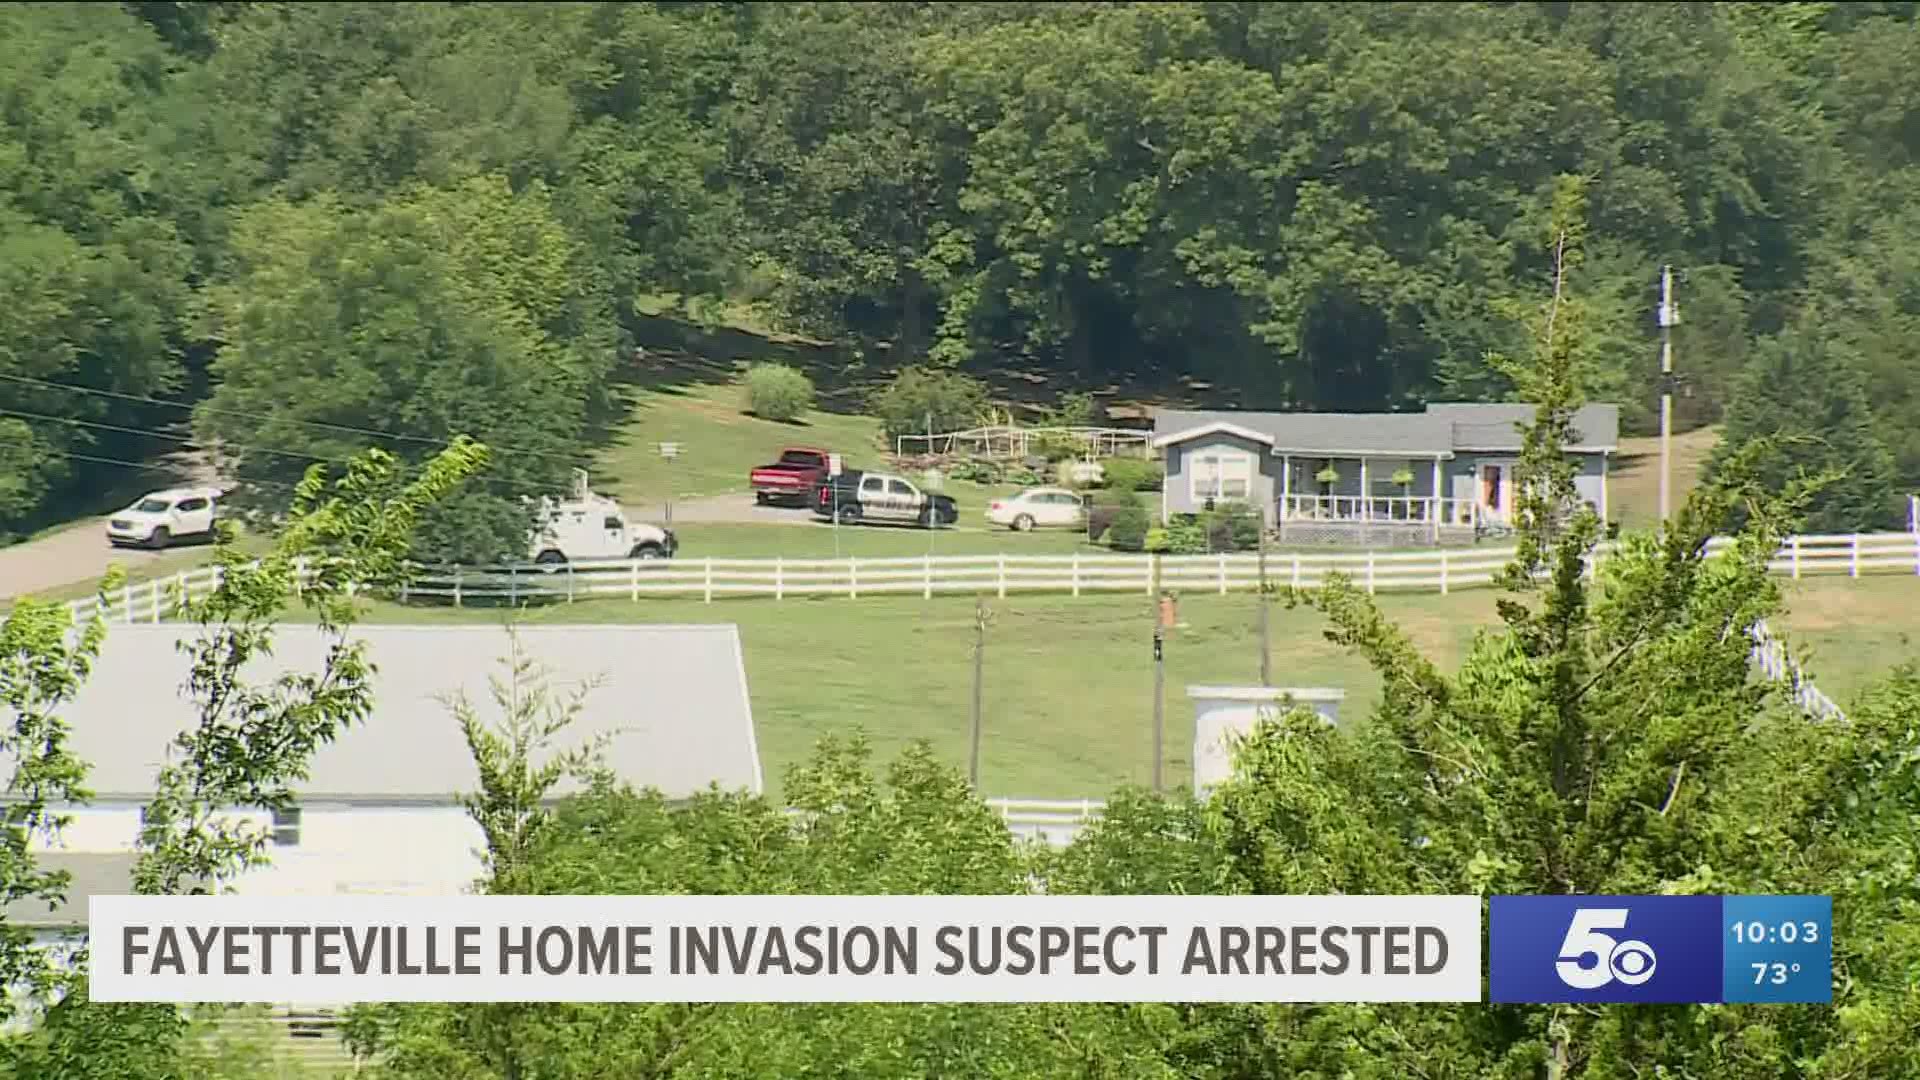 Fayetteville home invasion suspect arrested.